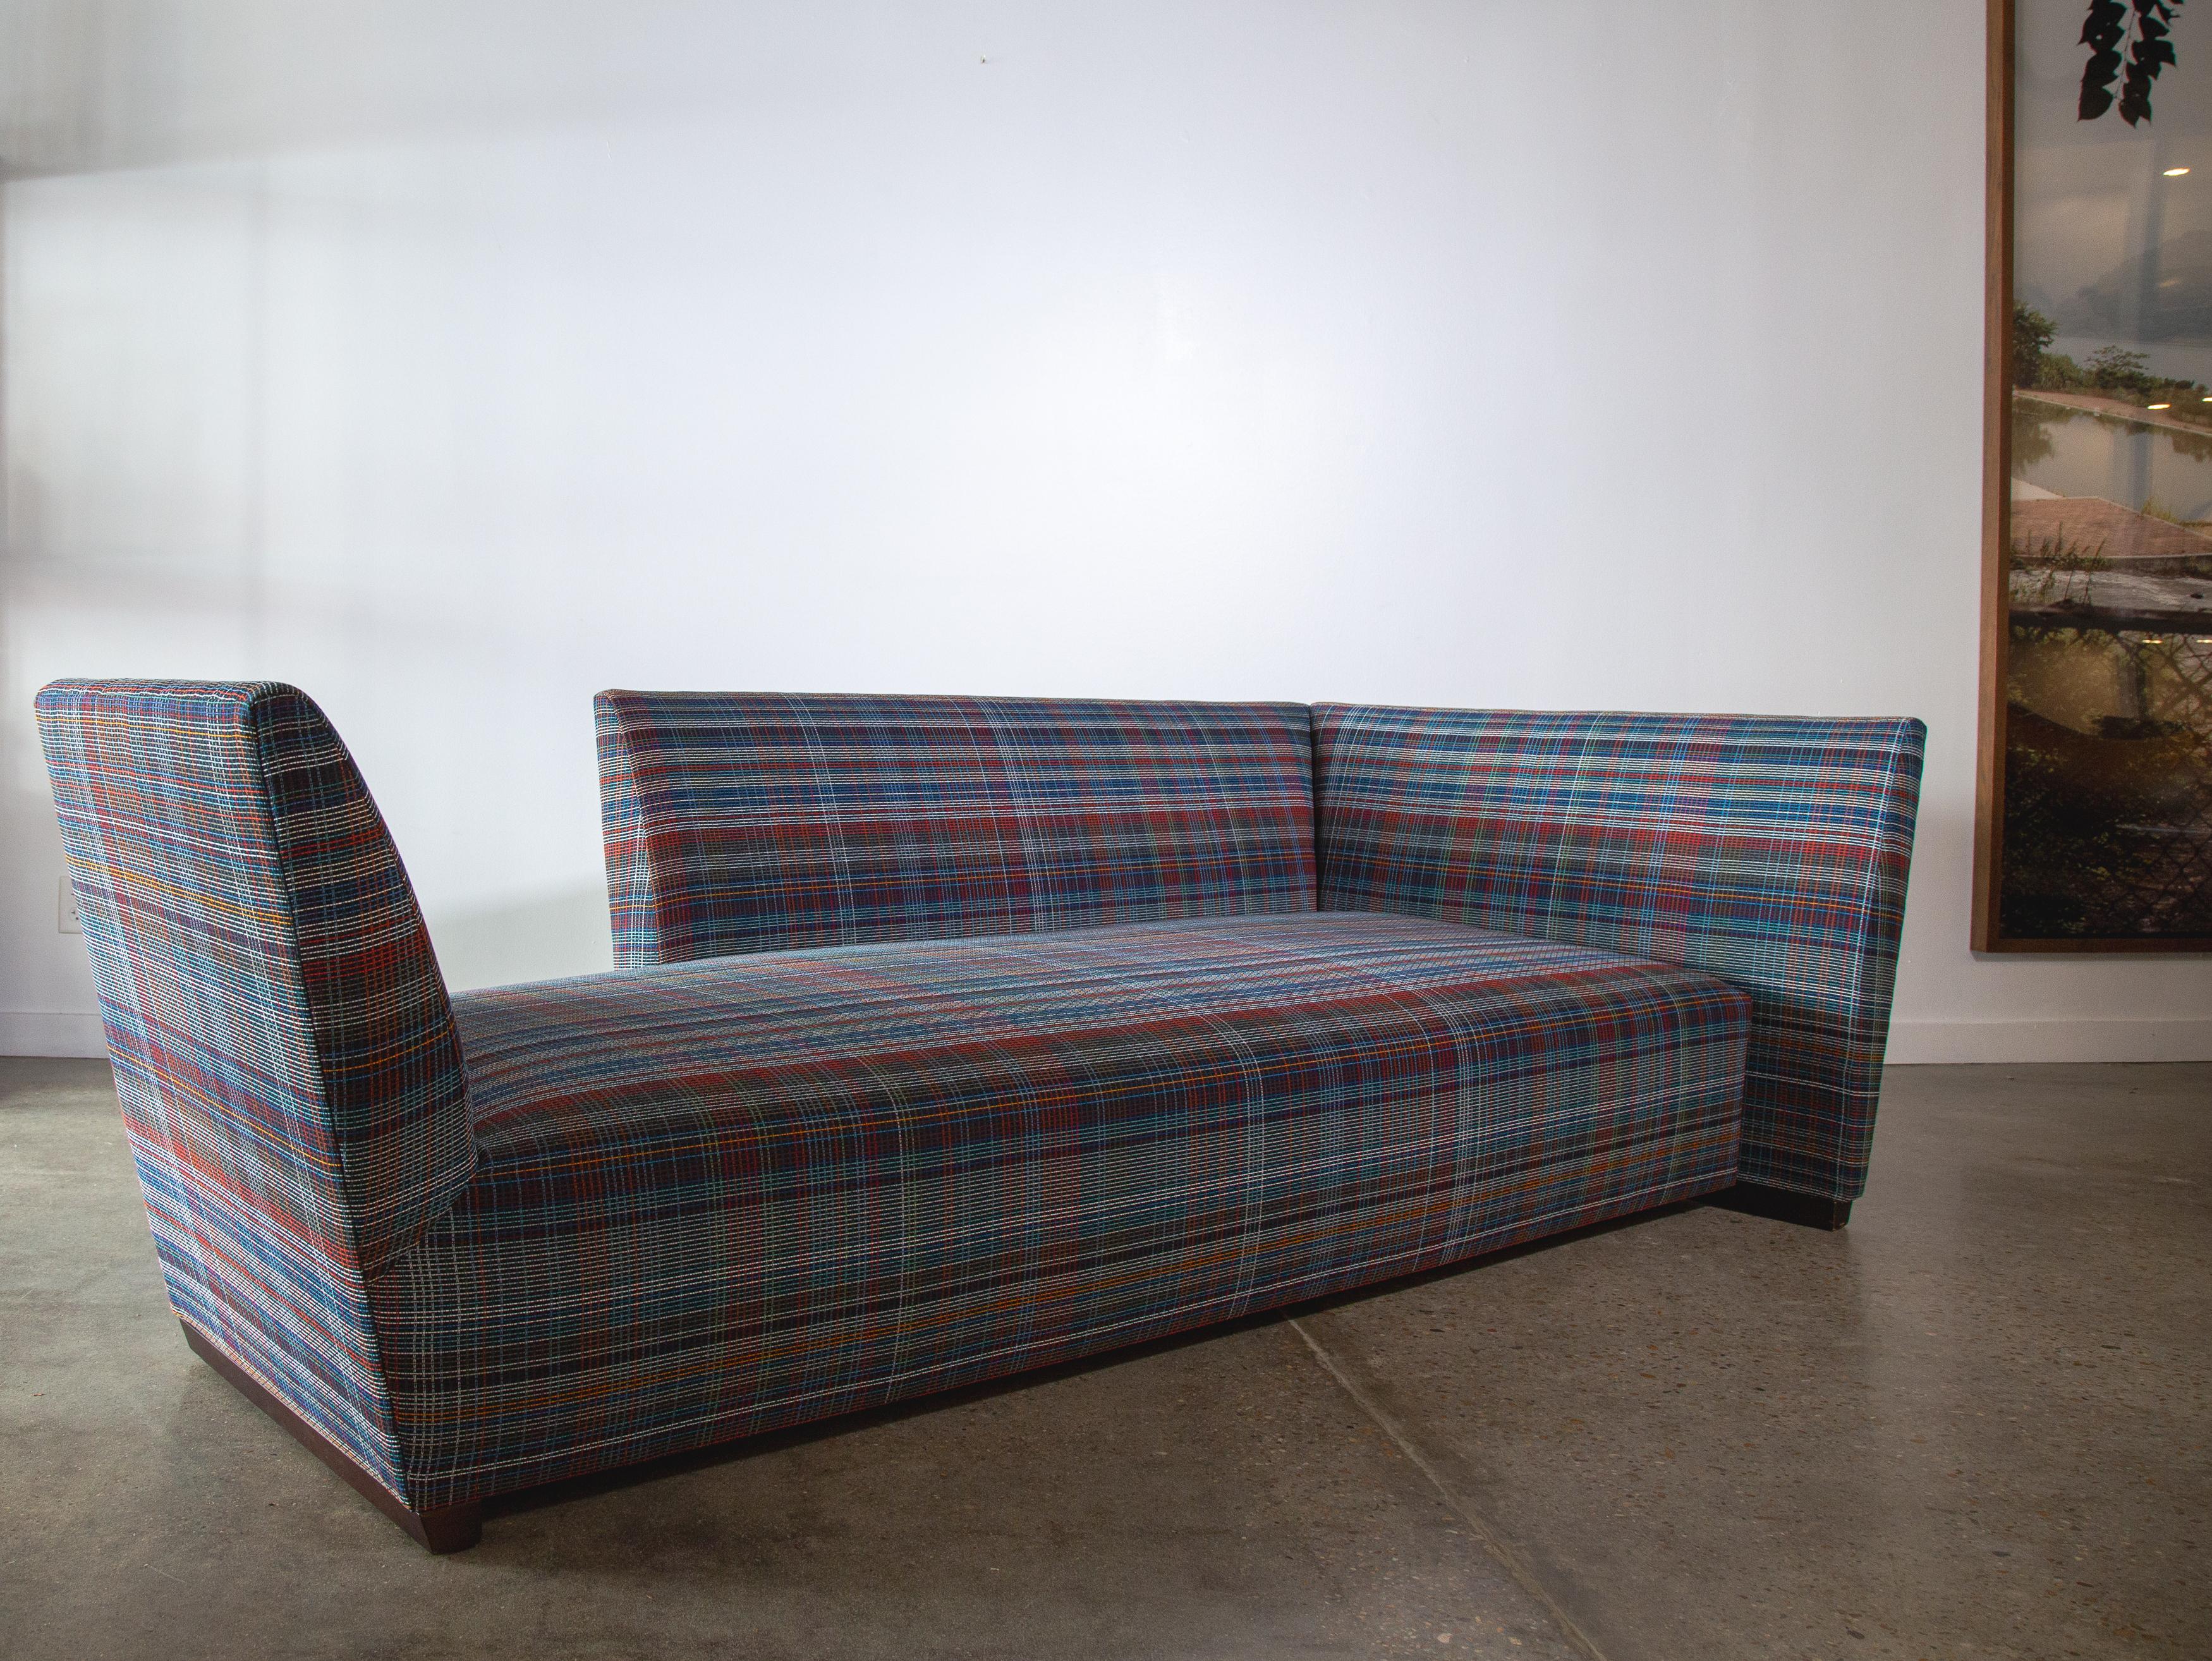 Joe D'Urso Island Sofa for Donghia Knoll Plaidtastic Fabric tete-a-tete chaise In Good Condition For Sale In Virginia Beach, VA